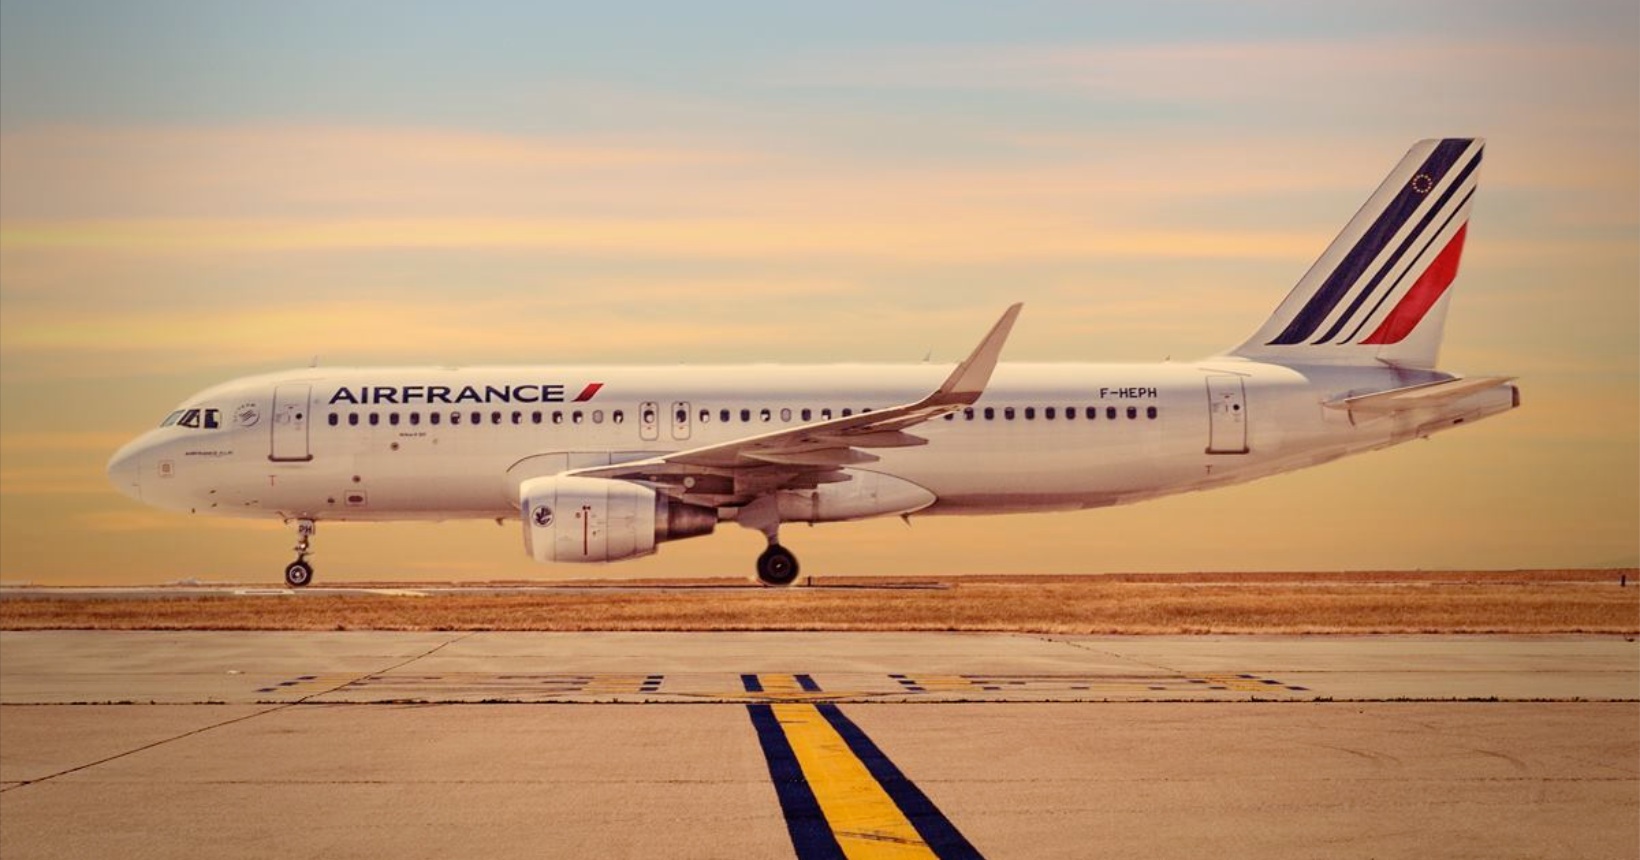 Air France starts a new international flight from Brazil